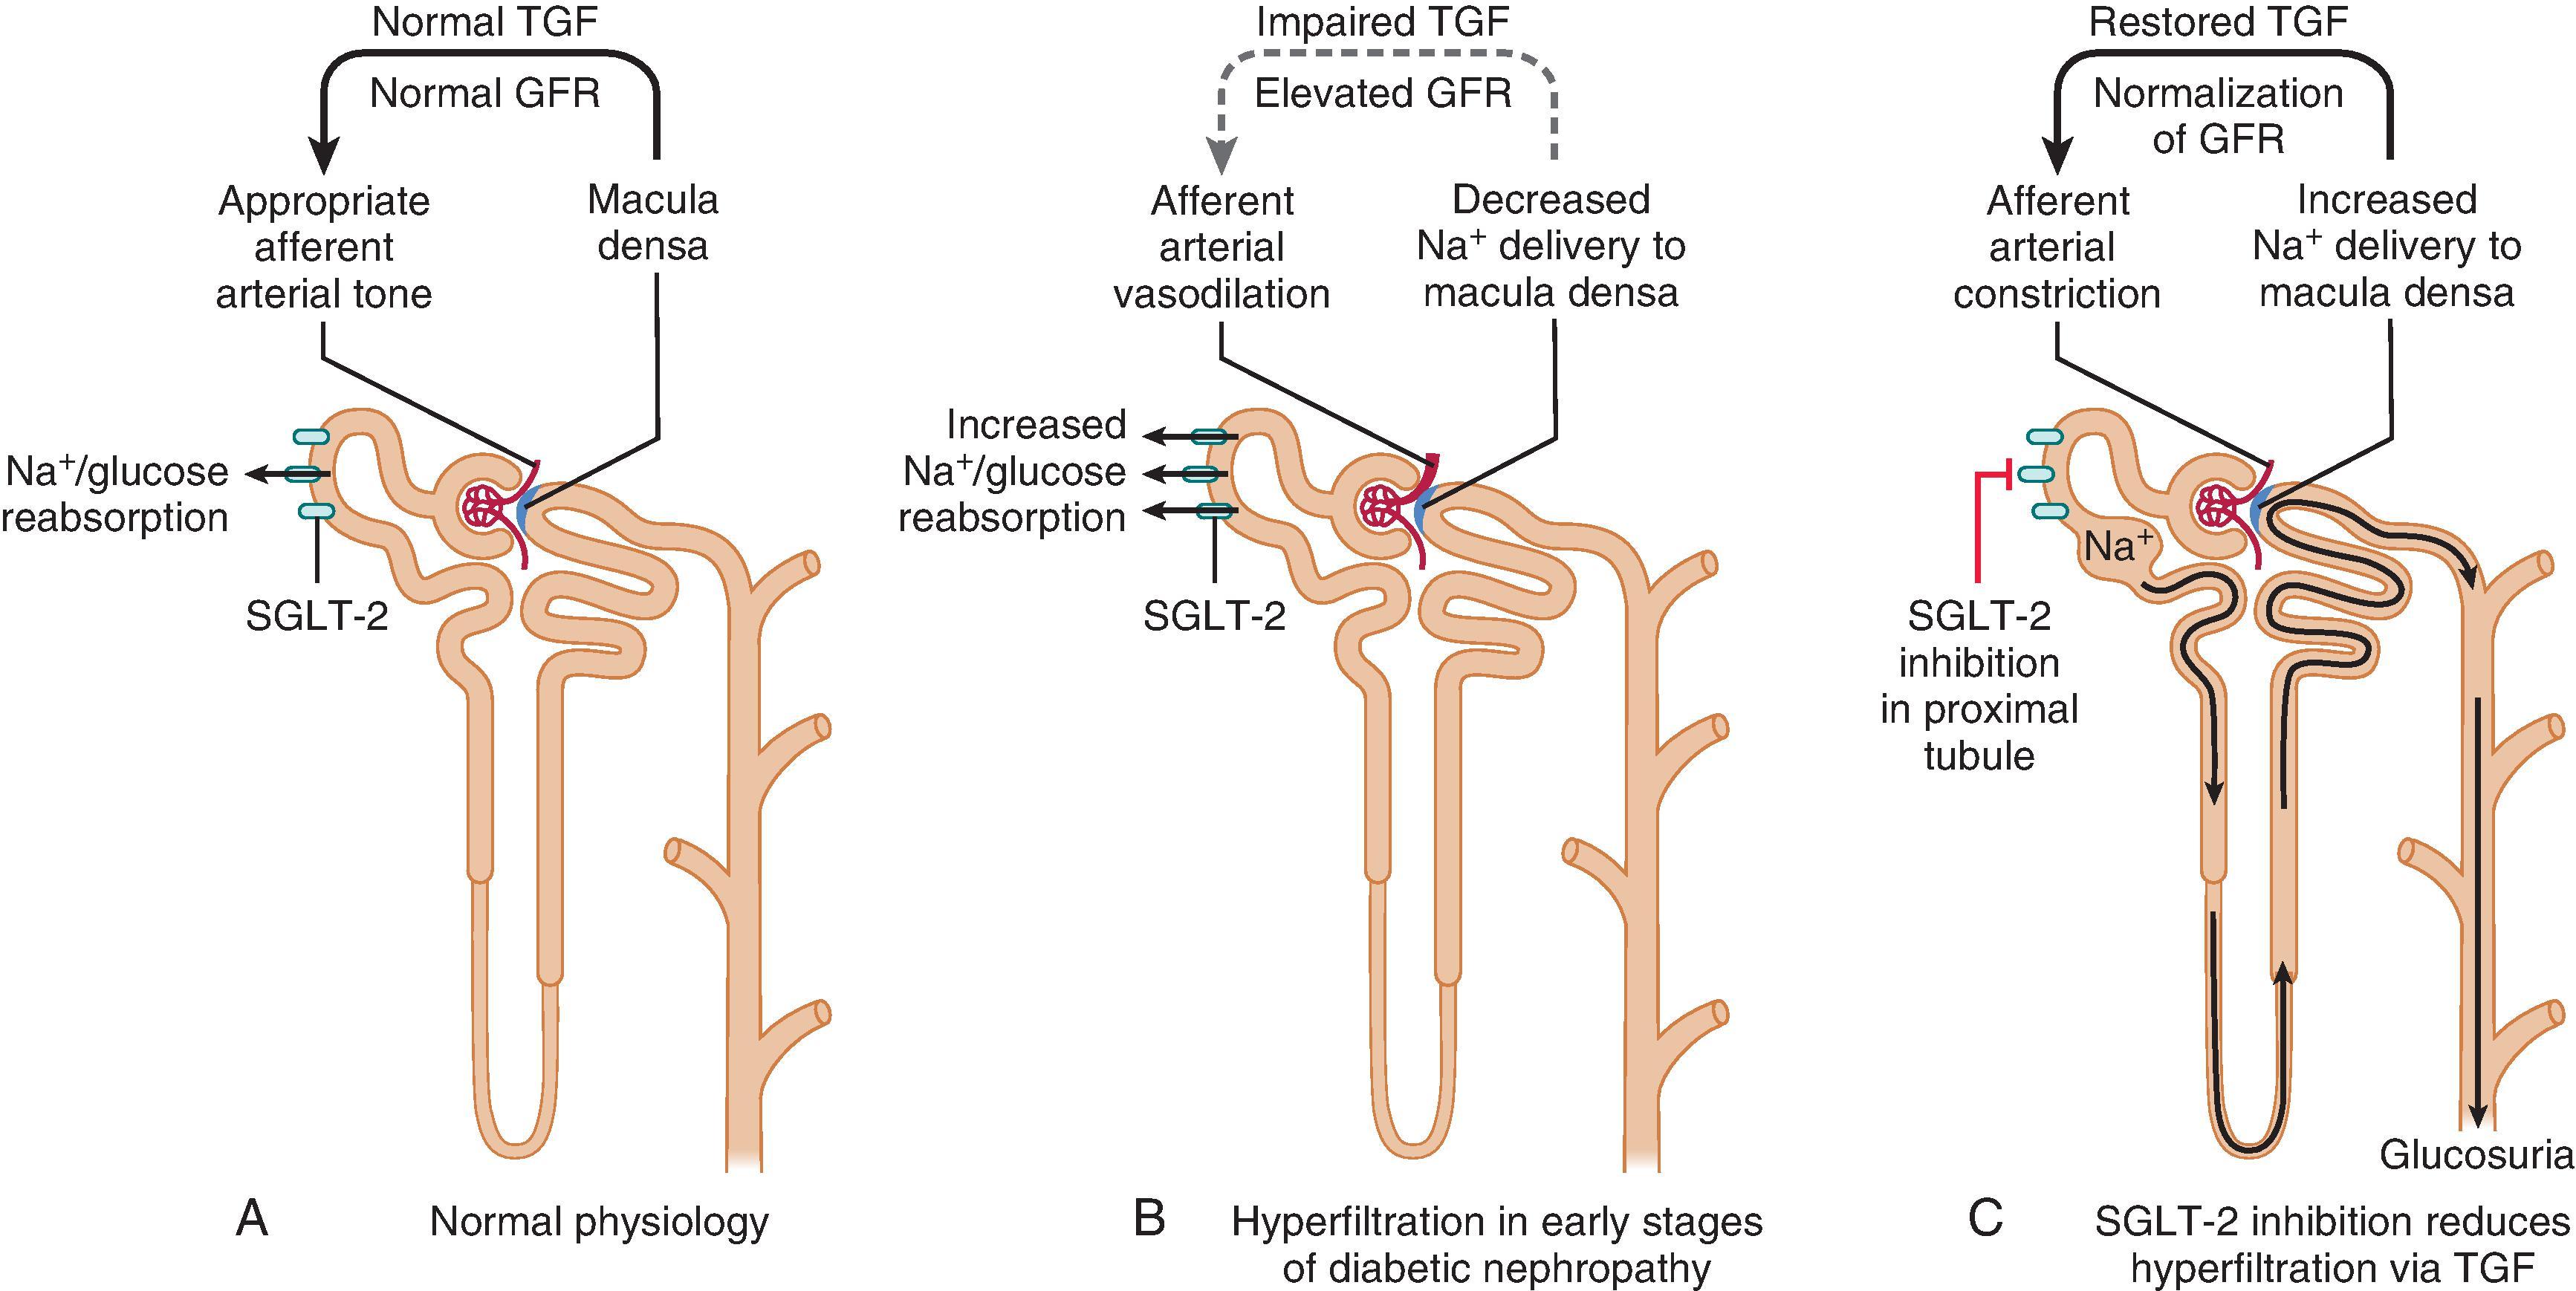 Fig. 26.5, Proposed tubuloglomerular feedback mechanisms in (A) normal physiology, (B) early stages of diabetic nephropathy, and (C) after sodium-glucose cotransporter 2 (SGLT-2) inhibition. GFR, Glomerular filtration rate; TGF , tubuloglomerular feedback; (Adapted from Cherney DZI, Perkins BA, Soleymanlou N, et al: The renal hemodynamic effect of sodium-glucose cotransporter 2 inhibition in patients with type 1 diabetes mellitus. Circulation 129(5):587–597, 2014.)